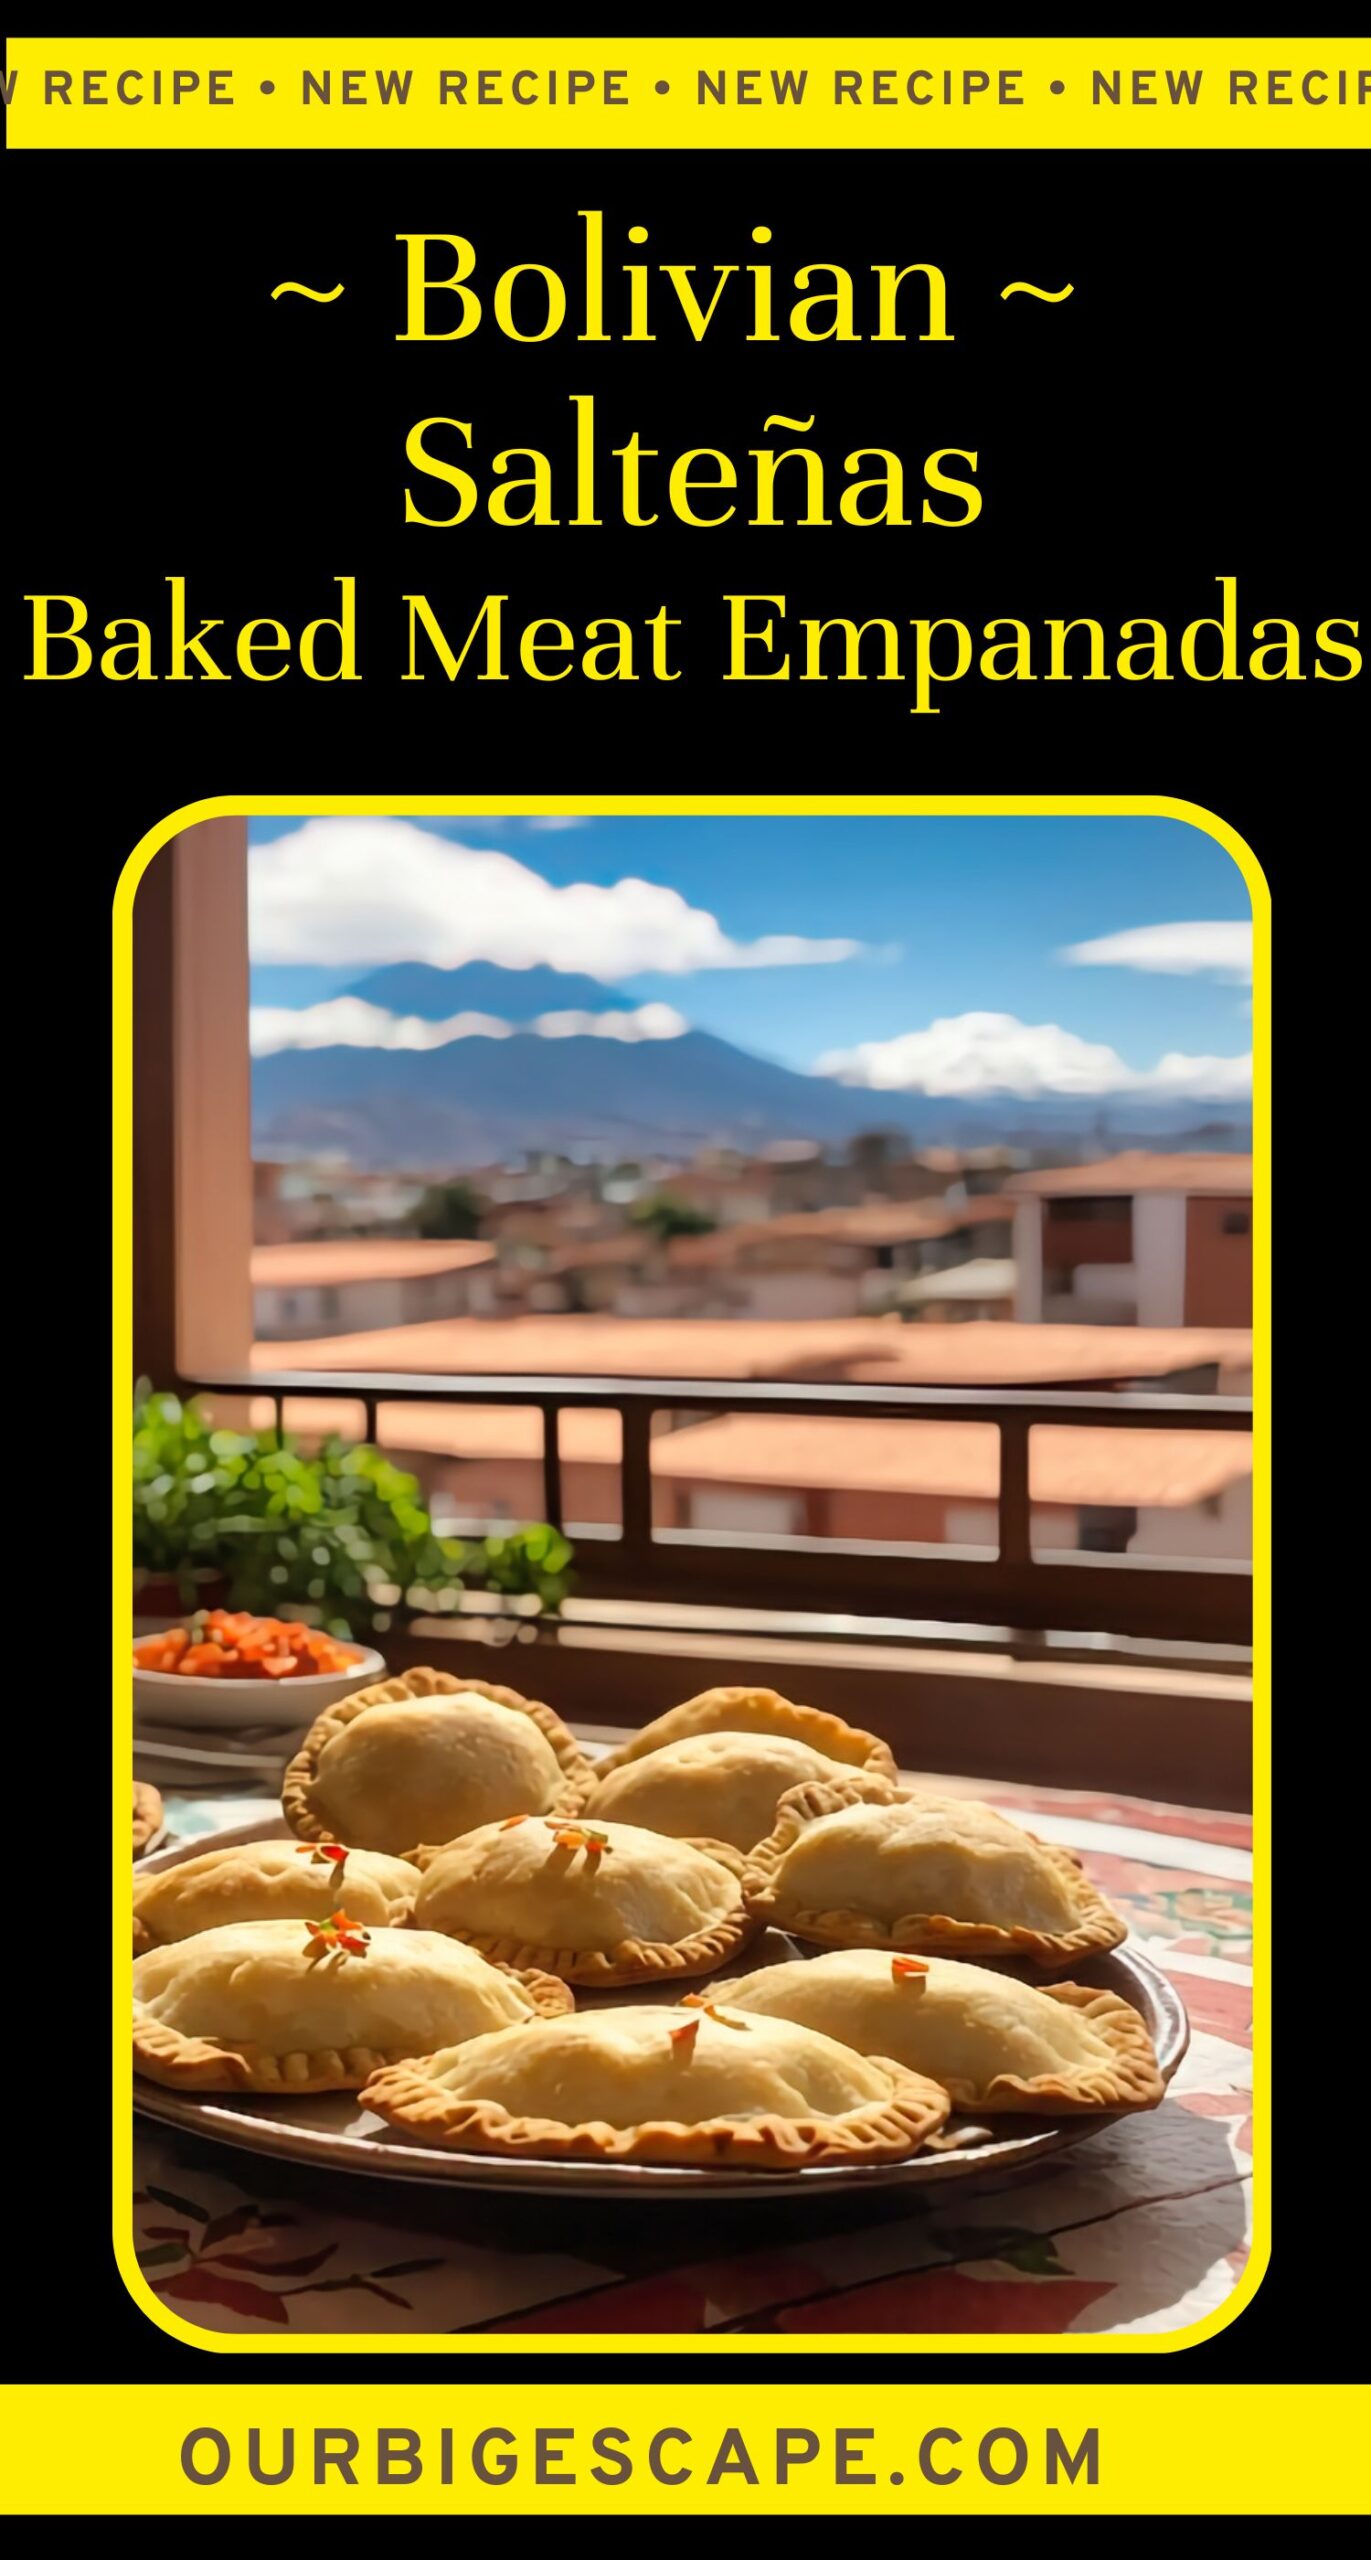 15. Salteñas (Baked Meat Empanadas)